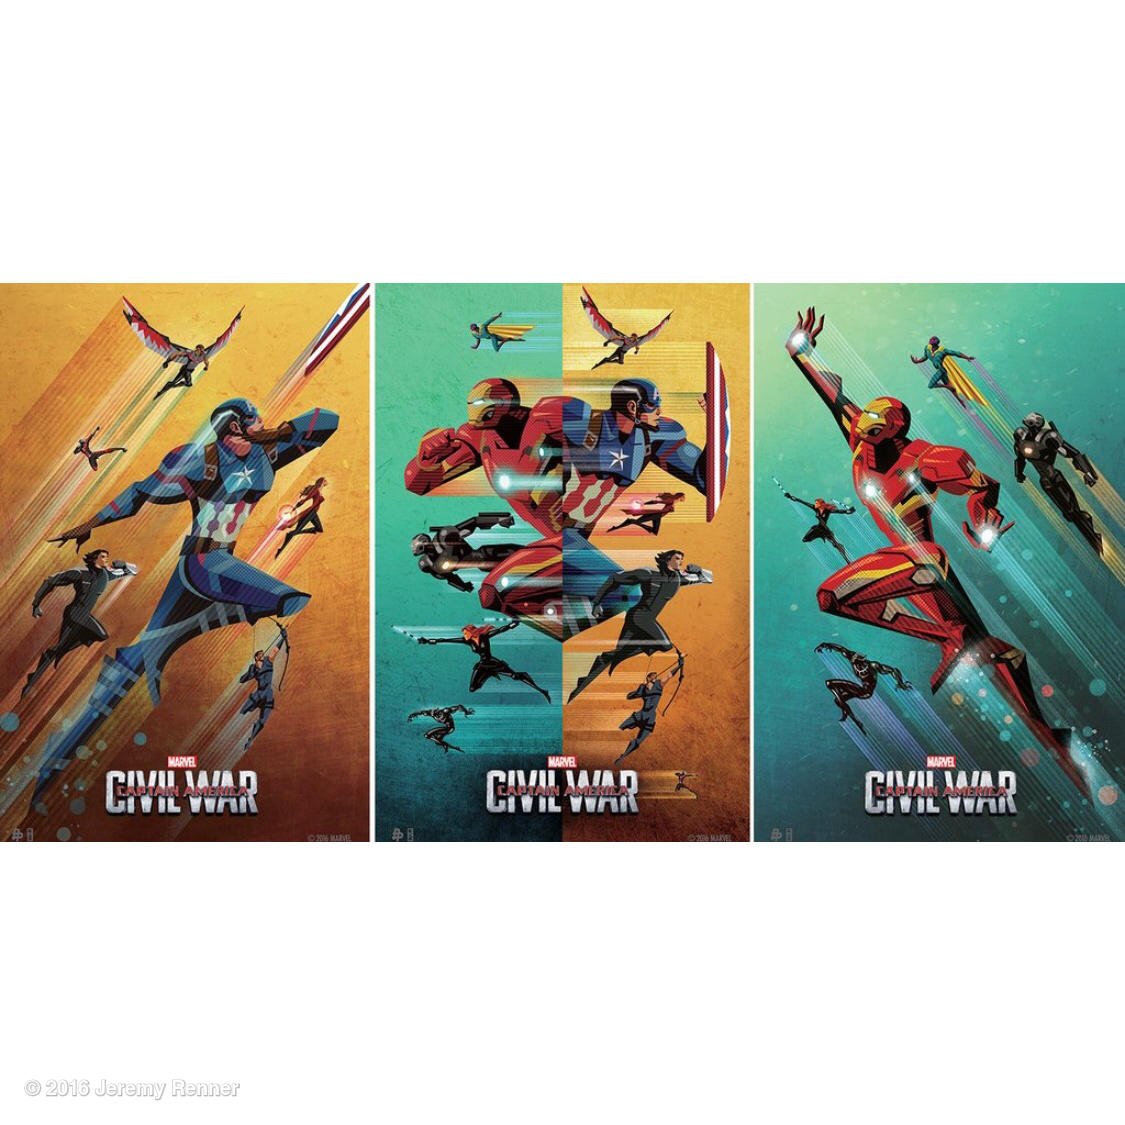 Poster art!! @DisneyStudios @Marvel #civilwar #teamcap #teamironman #cap3 https://t.co/wW5yrqGbxx